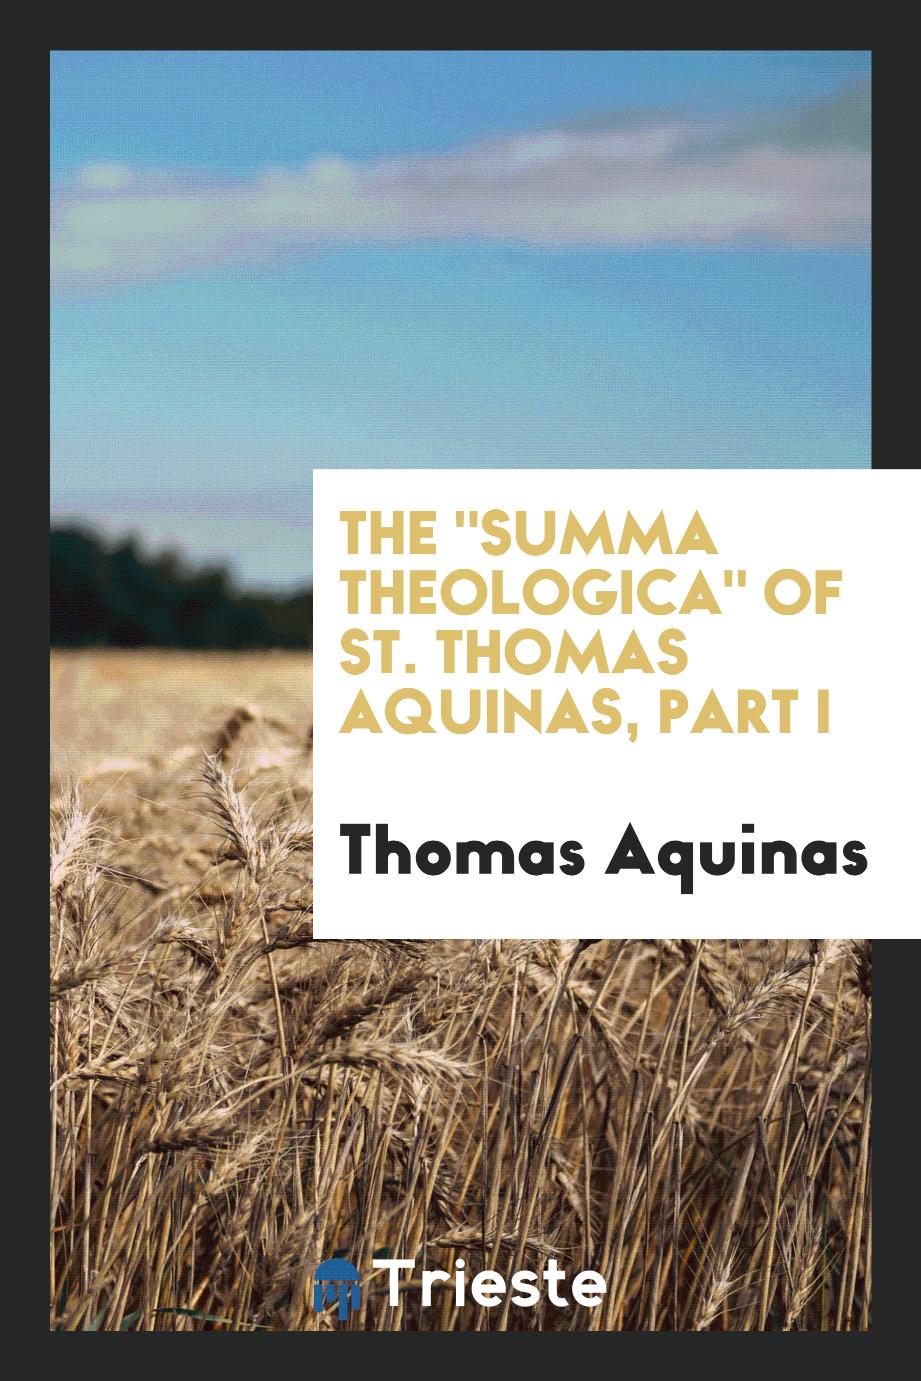 The "Summa theologica" of St. Thomas Aquinas, part I